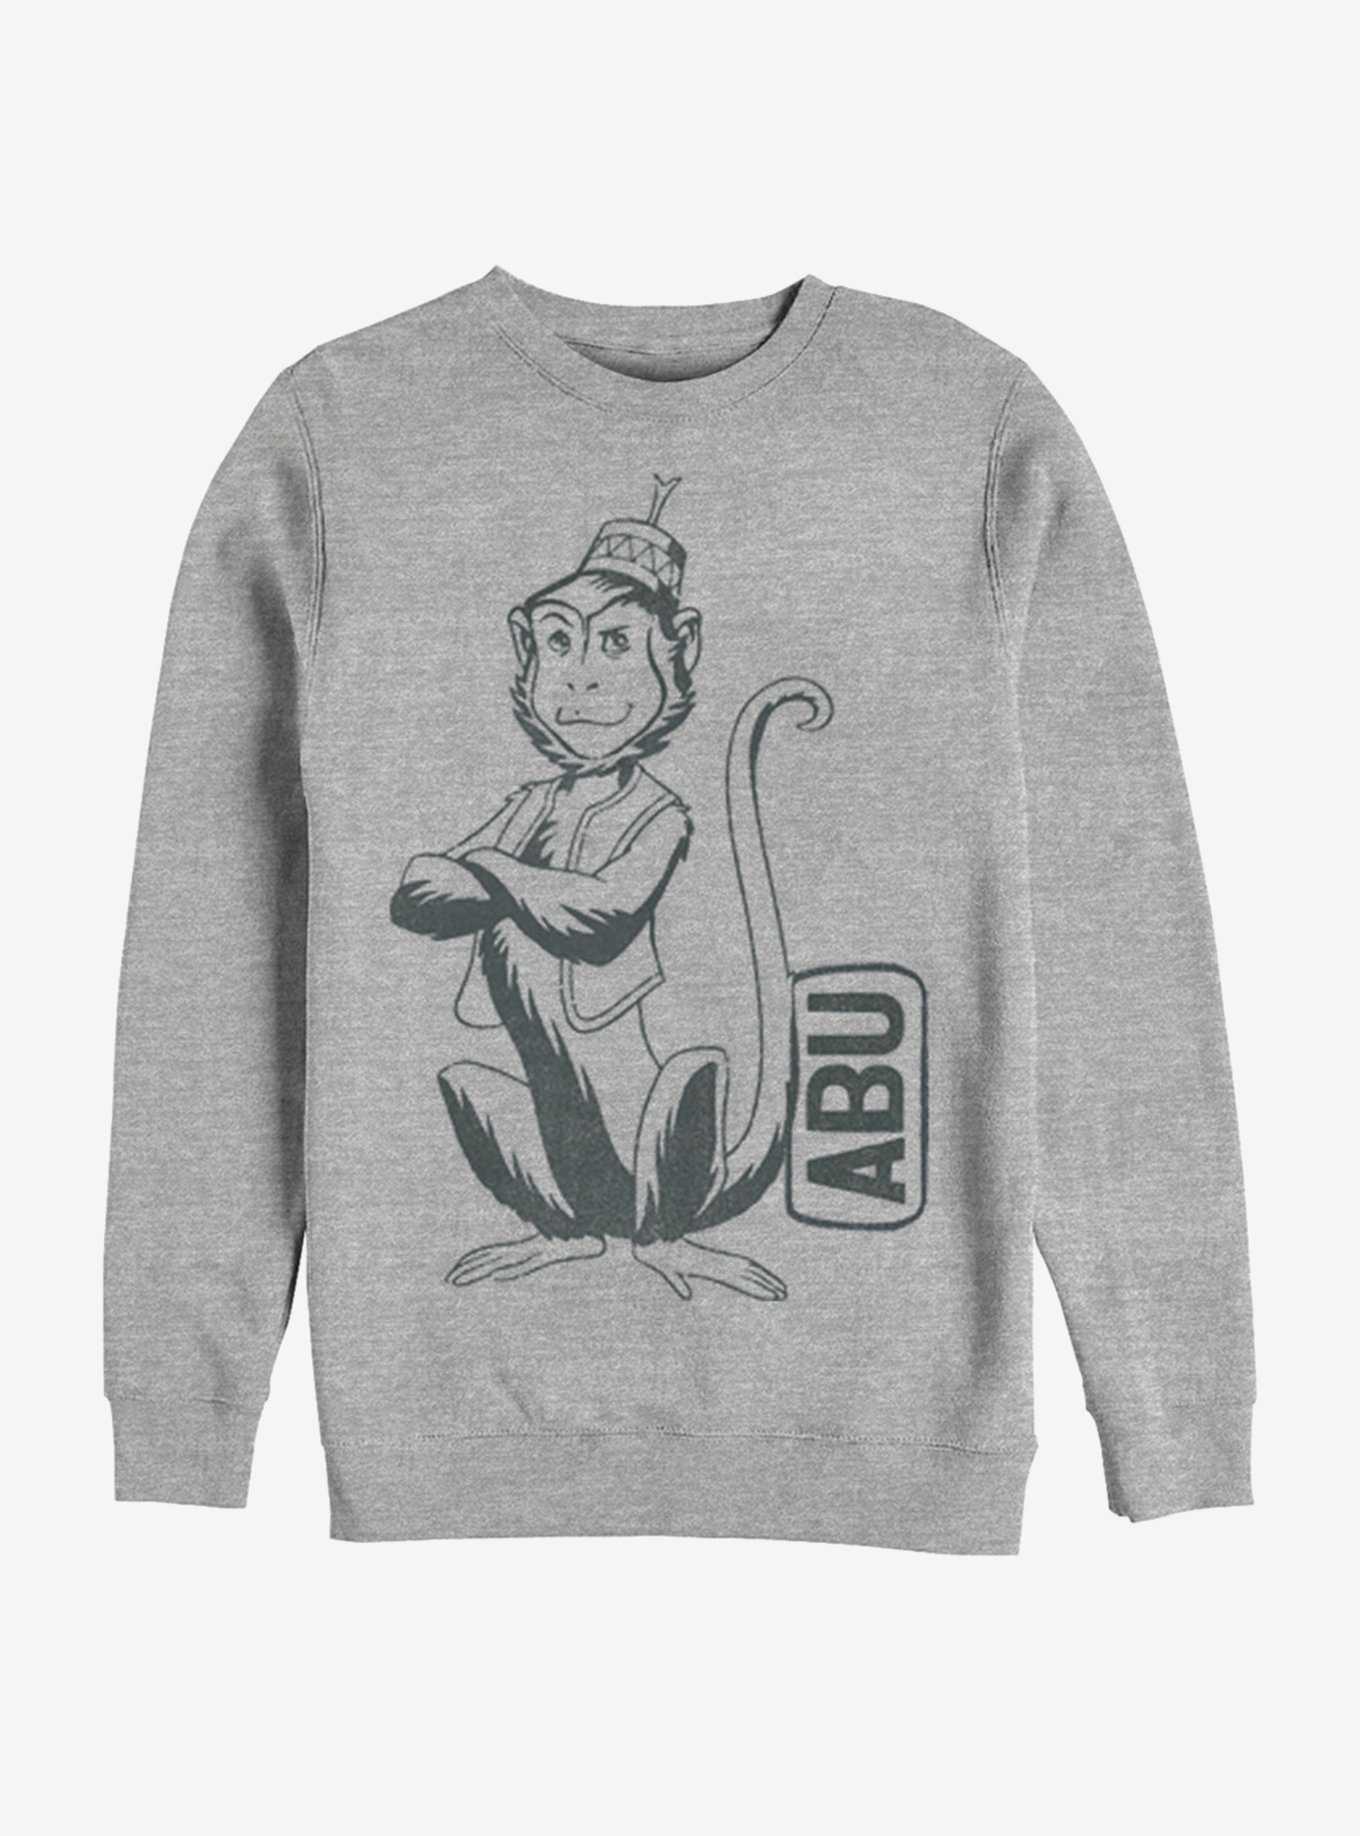 Disney Aladdin 2019 Abu Side Kick Pocket Sweatshirt, , hi-res